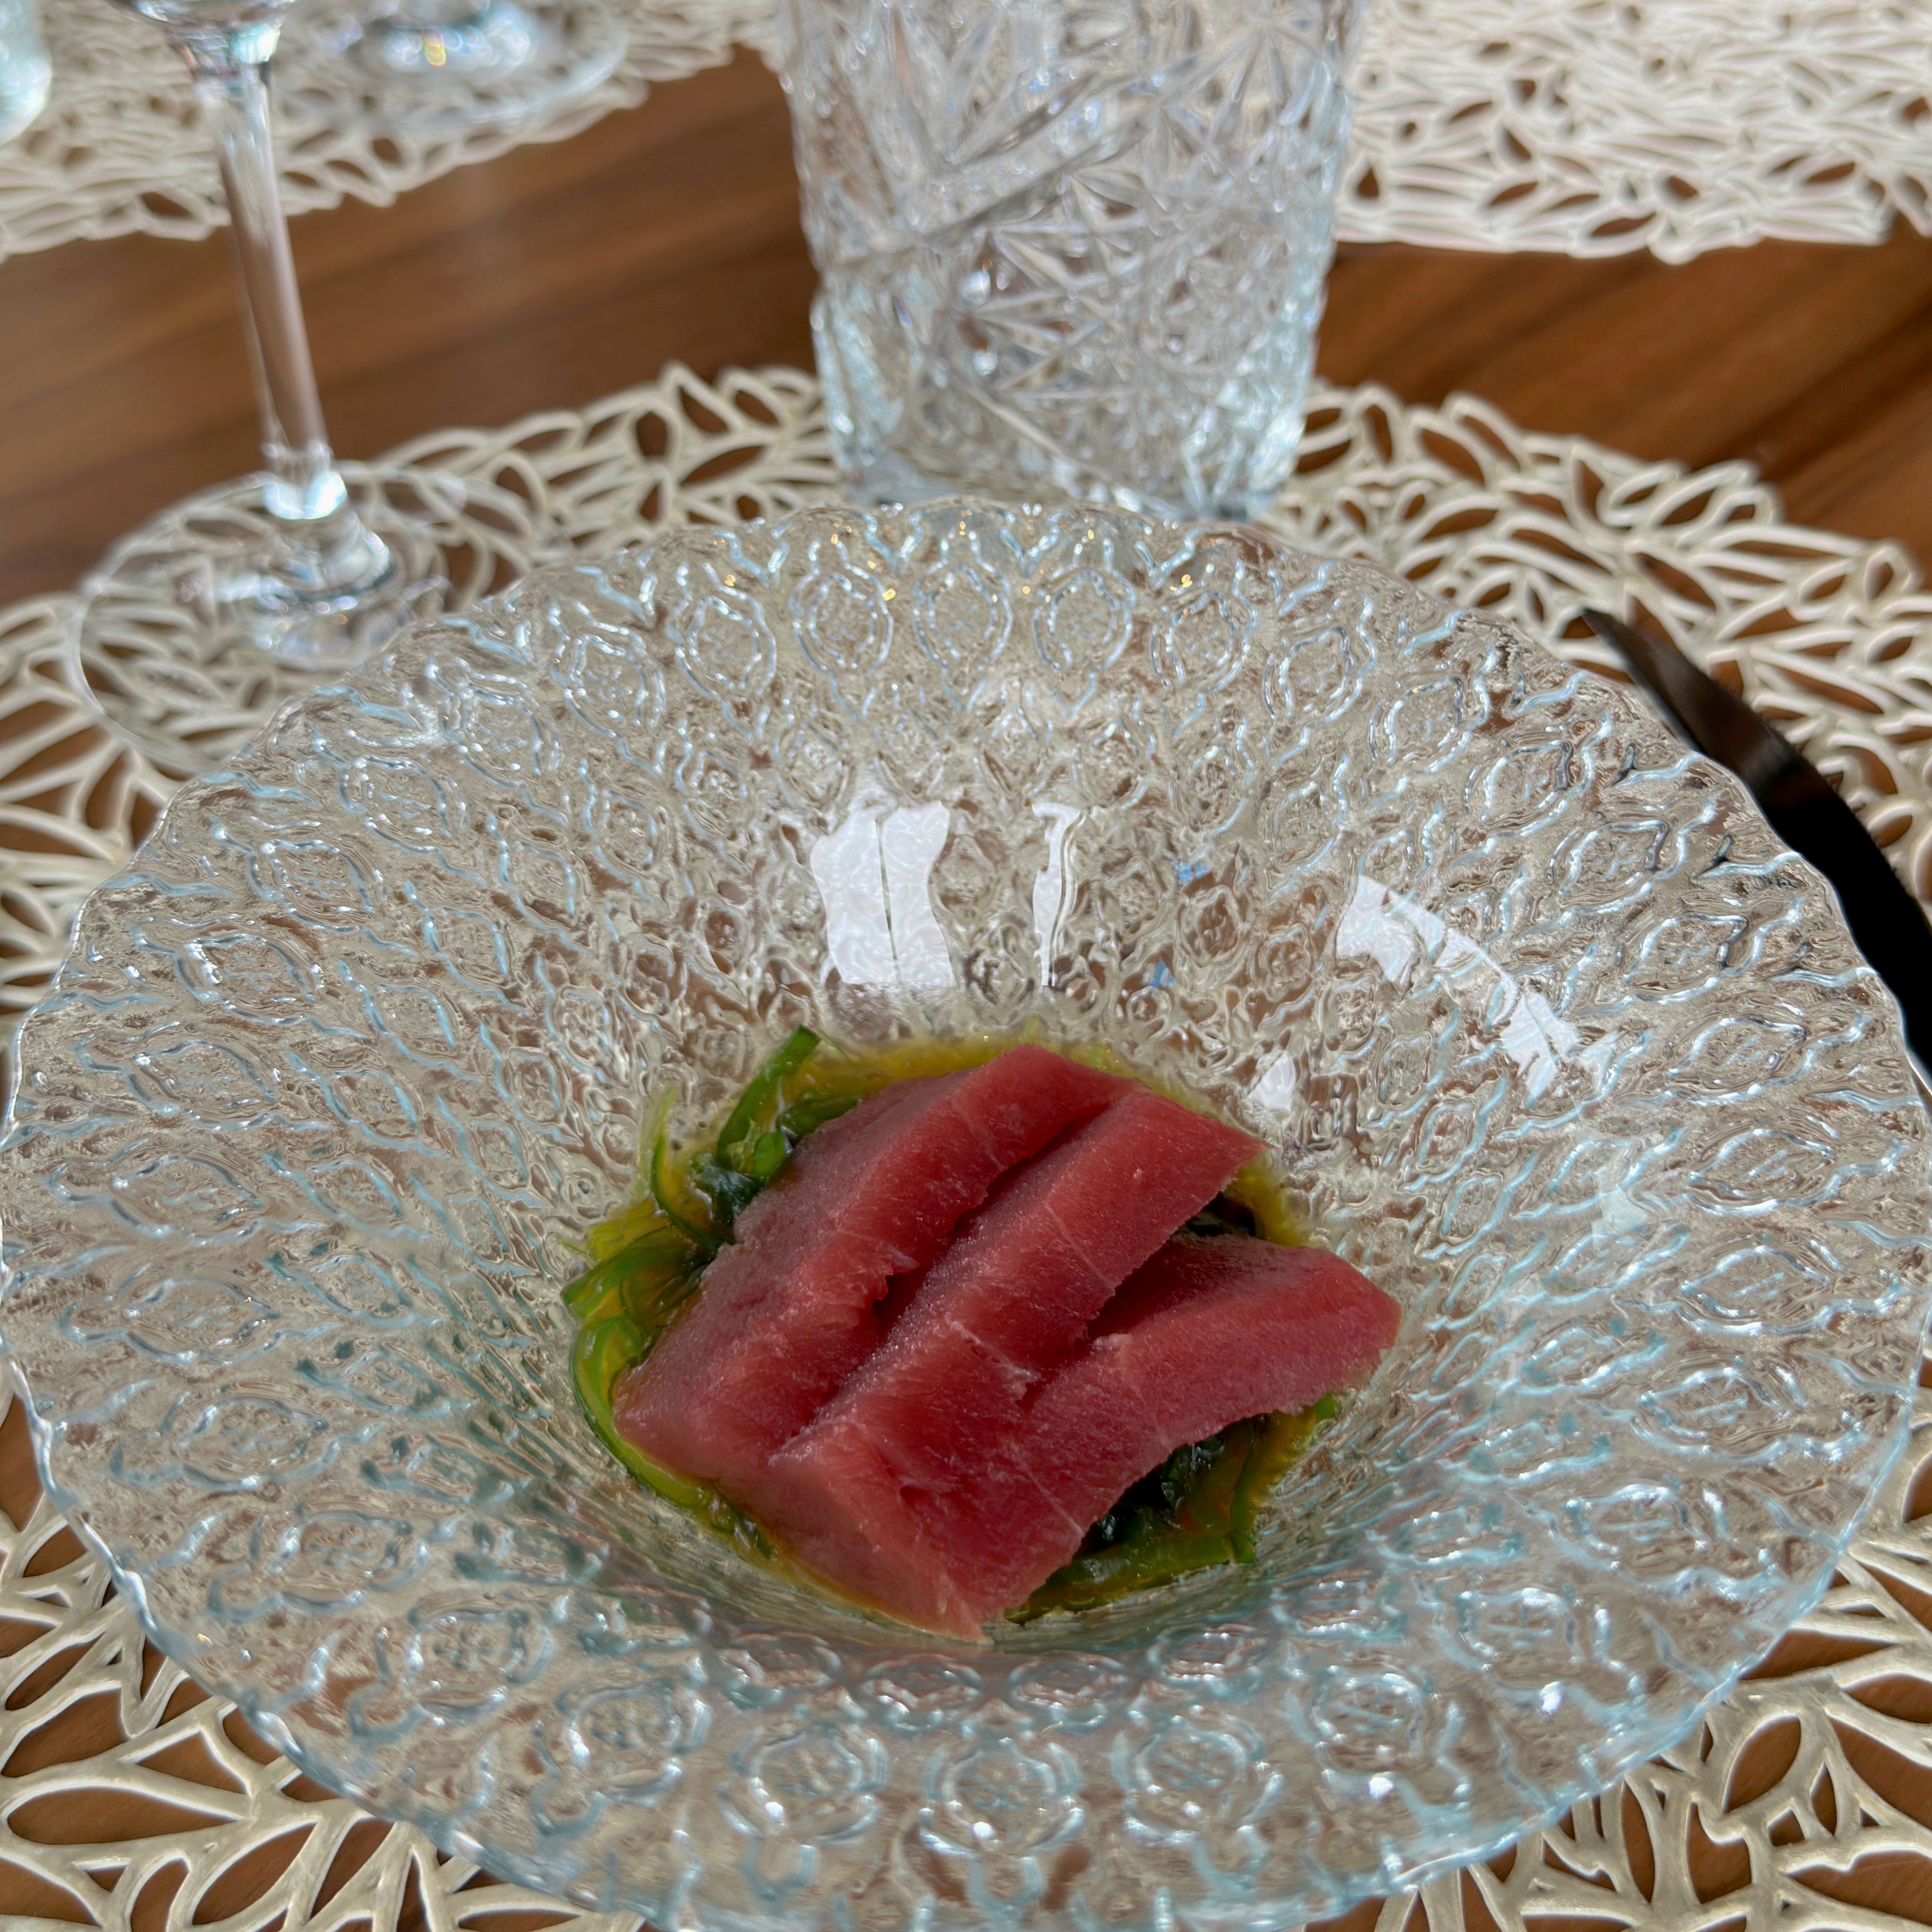 Sashimi di tonno